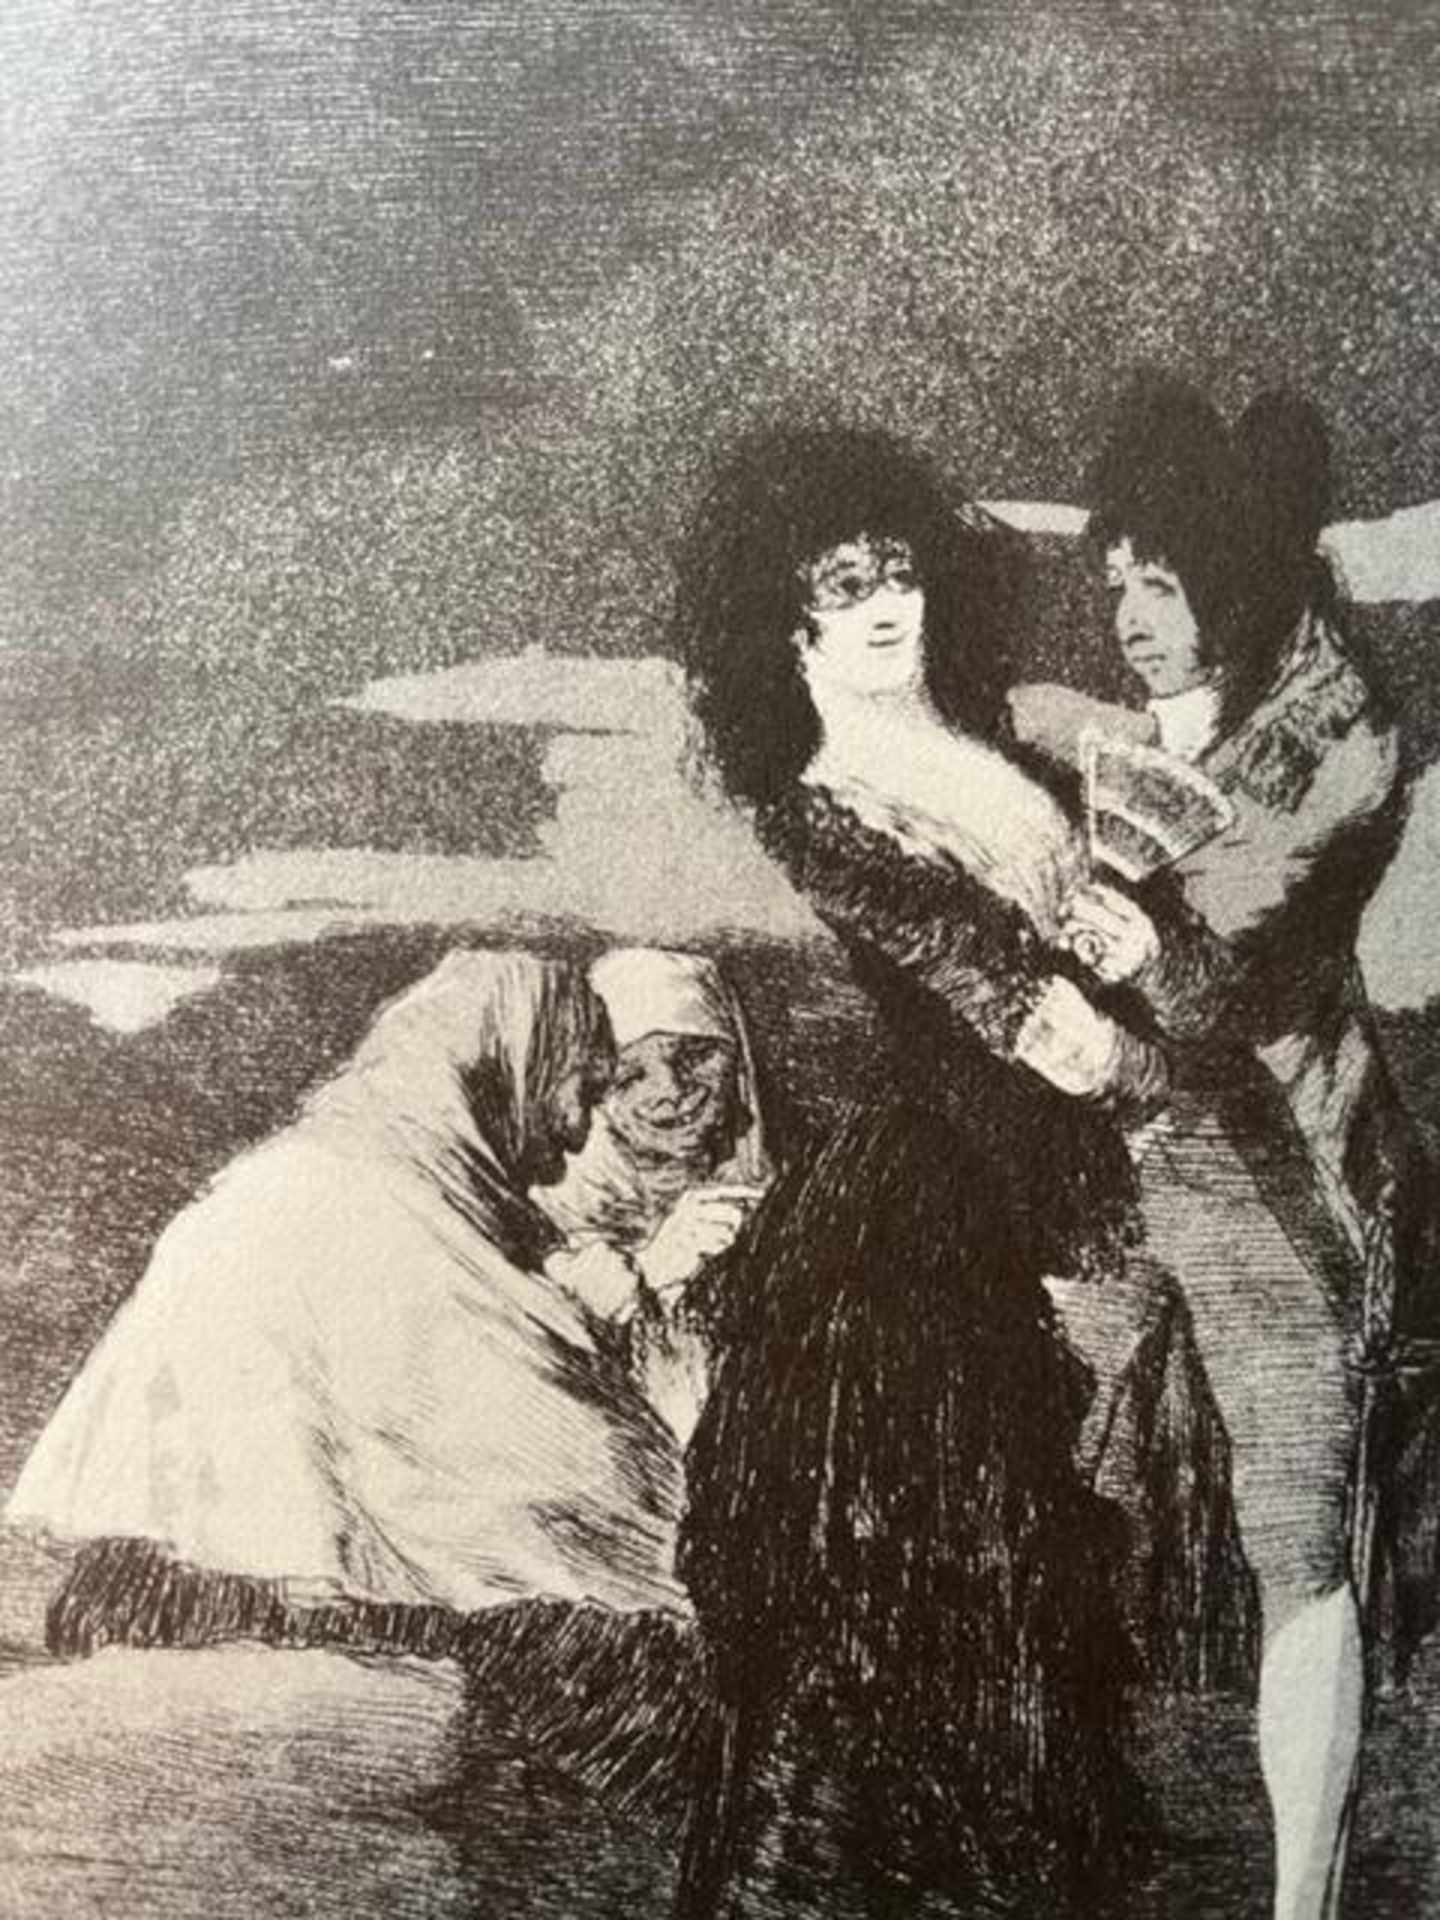 Francisco Goya "Tal para qual" Print.